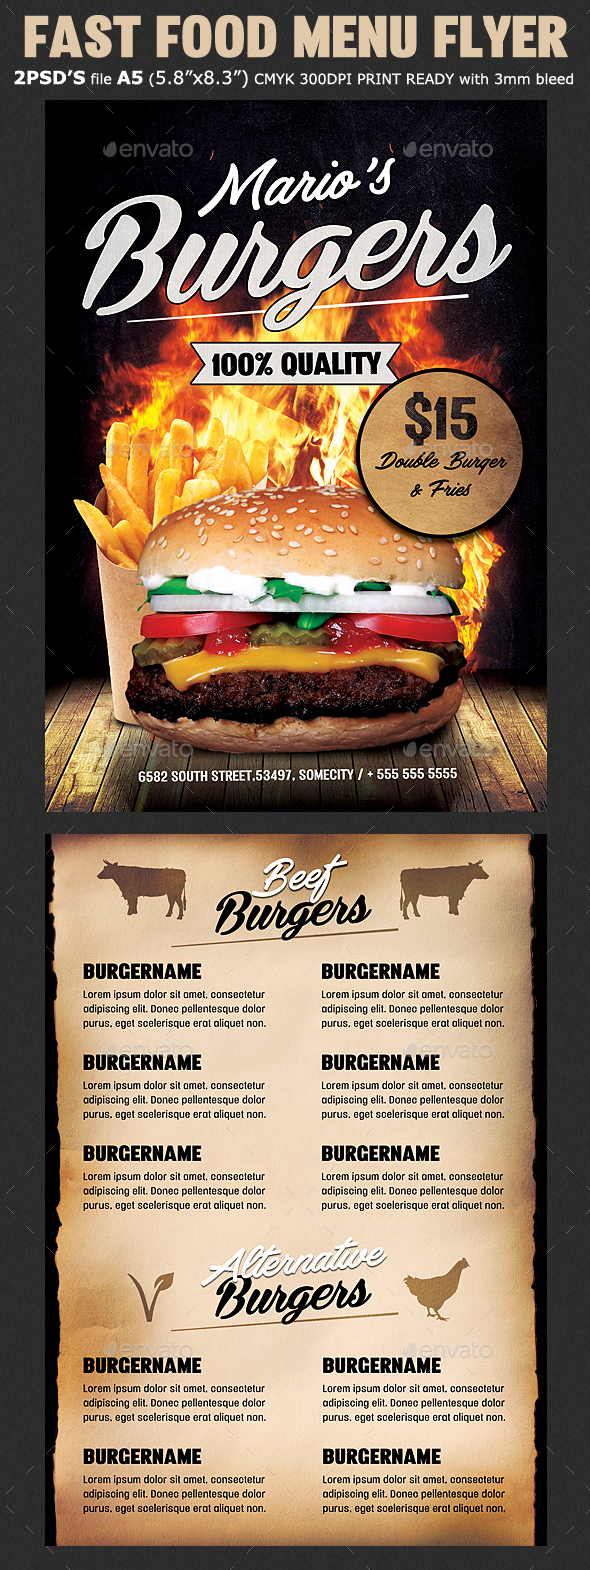 Fast Food Burger Menu Flyer Template